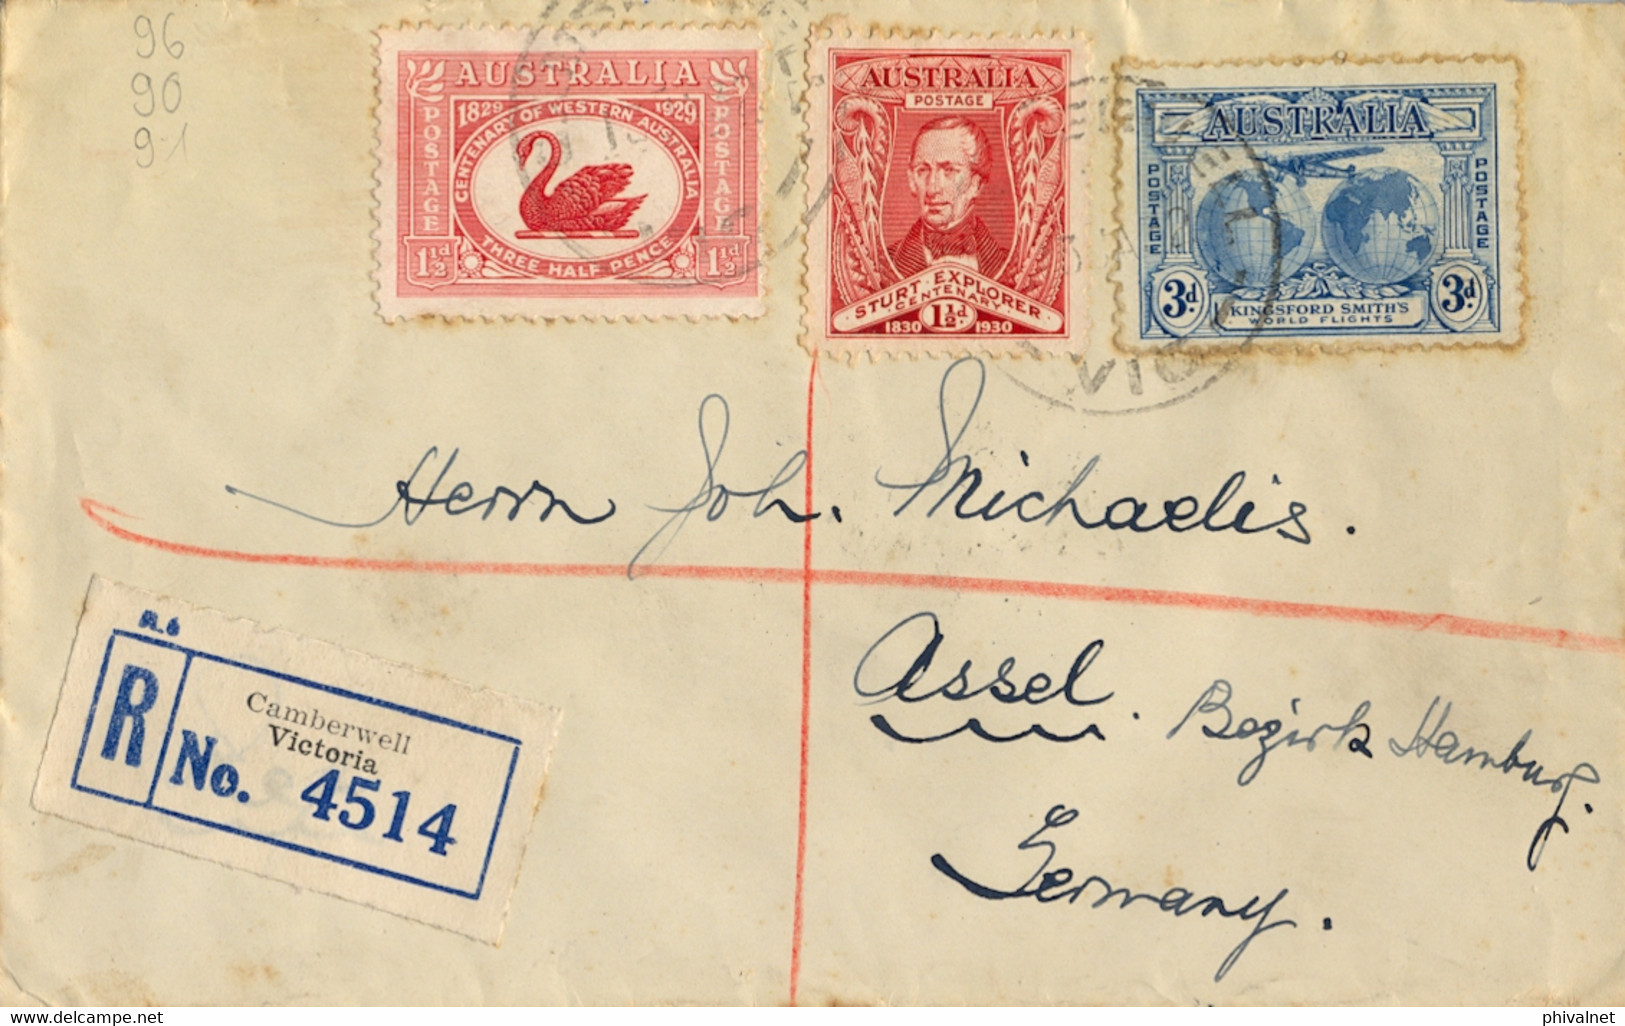 1932 AUSTRALIA , SOBRE CIRCULADO , YV. 67 , 68 / 69 - CAMBERWELL - ASSEL , CERTIFICADO VIA MELBOURNE , LLEGADA - Covers & Documents